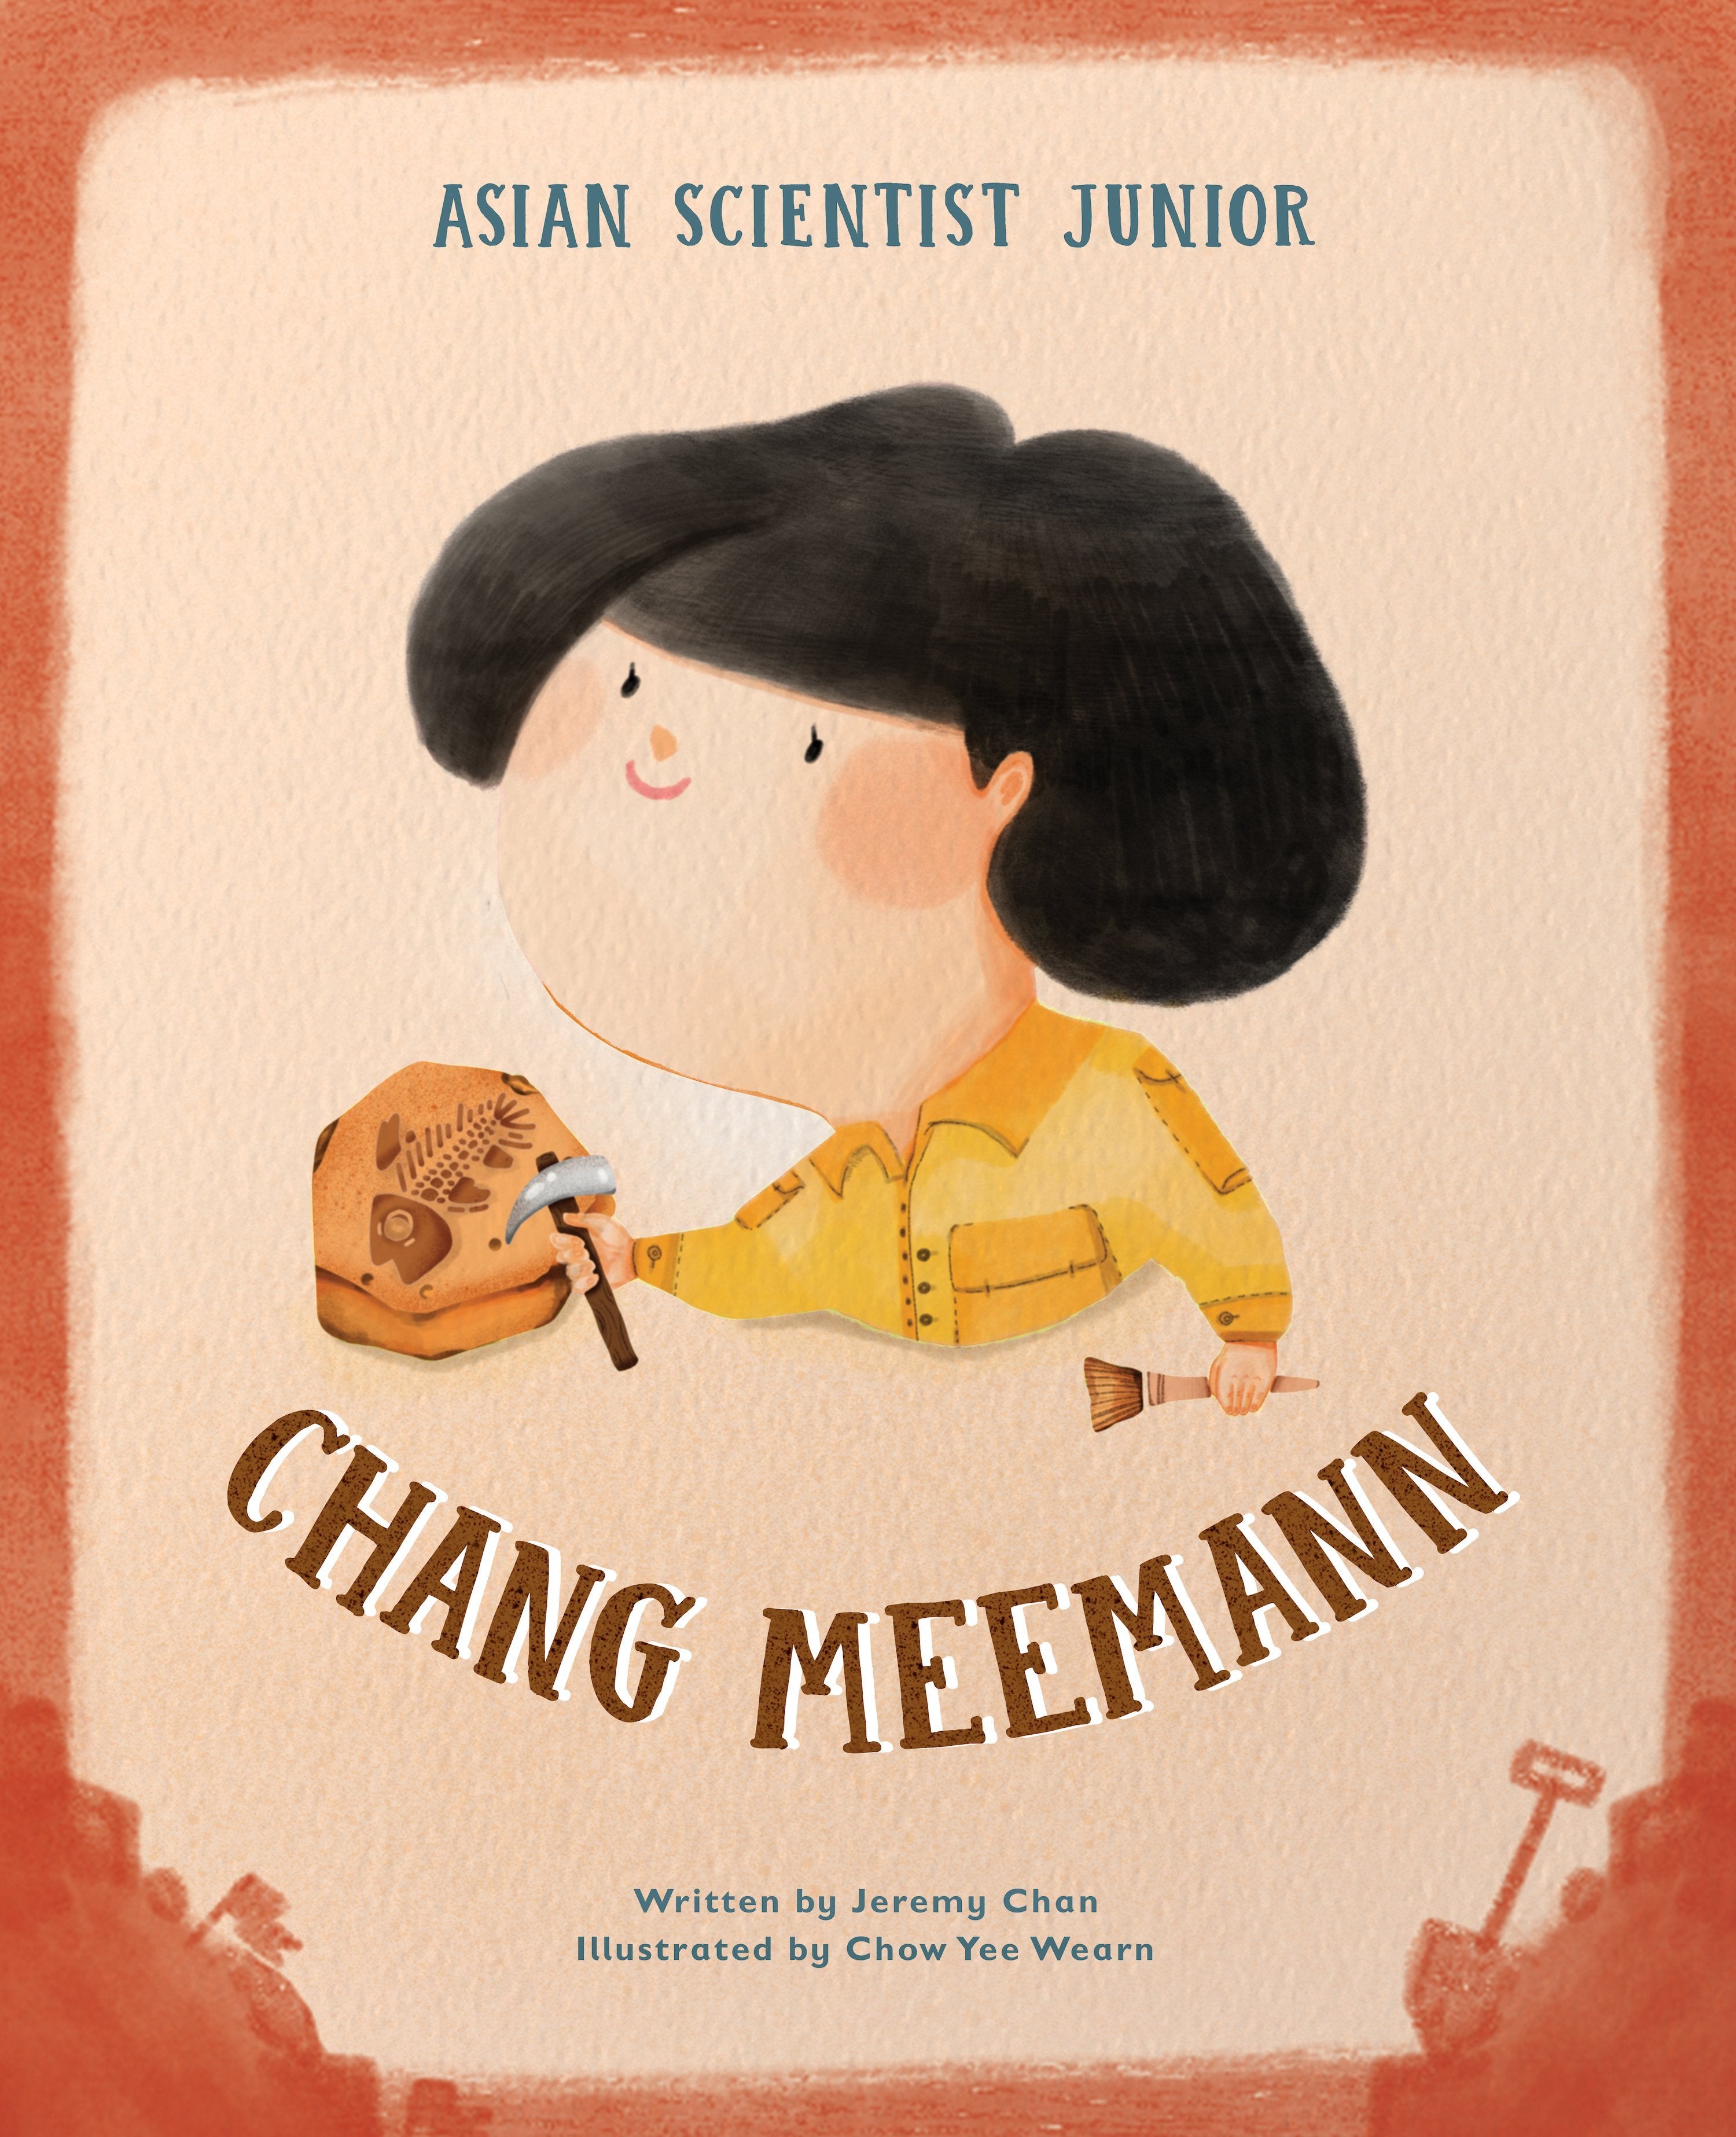 Asian Scientist Junior: Chang Meemann